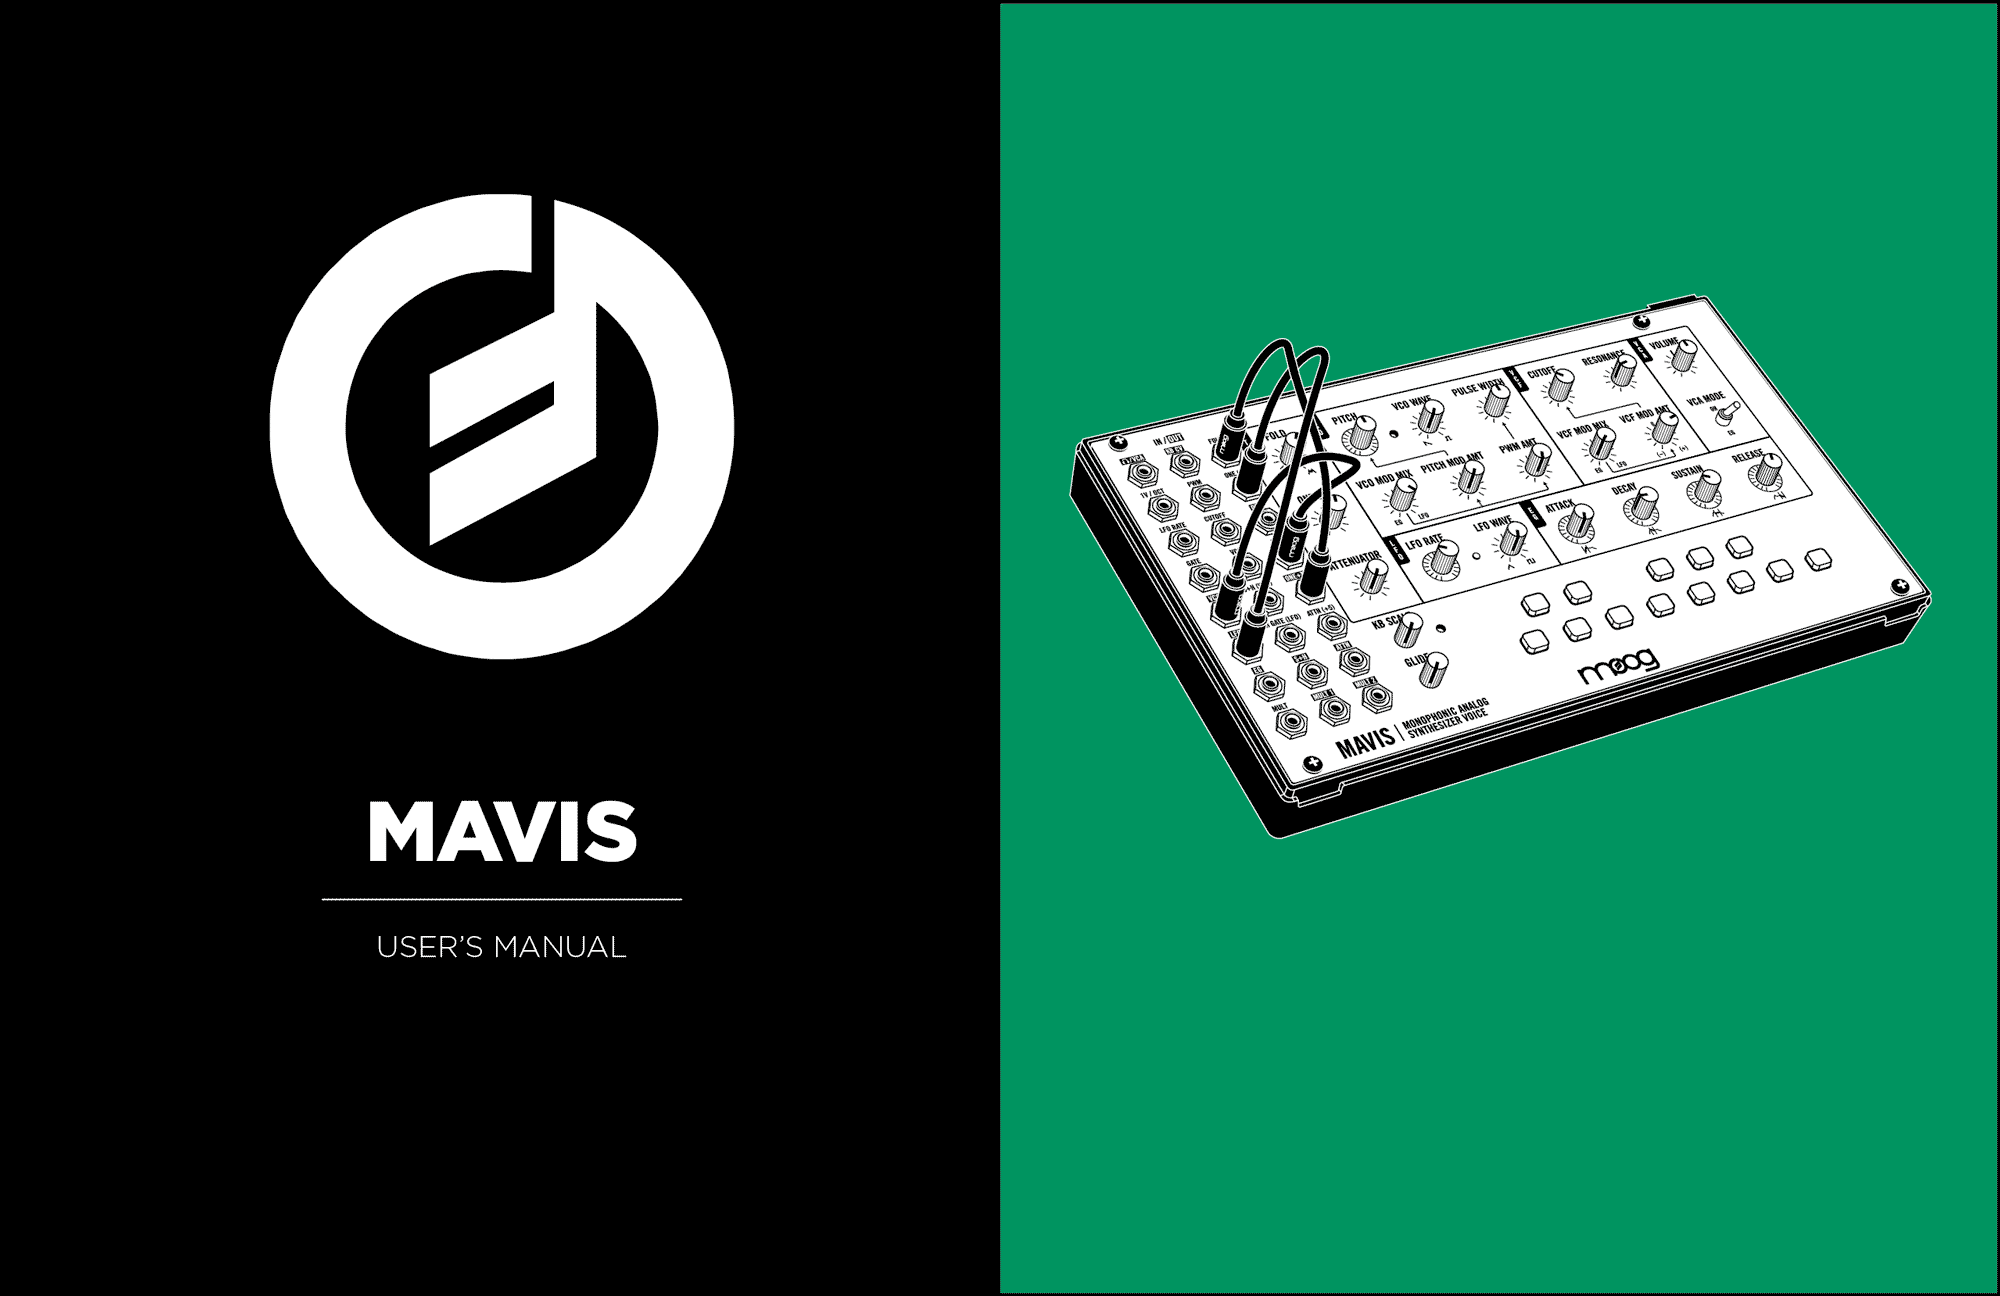 Mavis User’s Manual